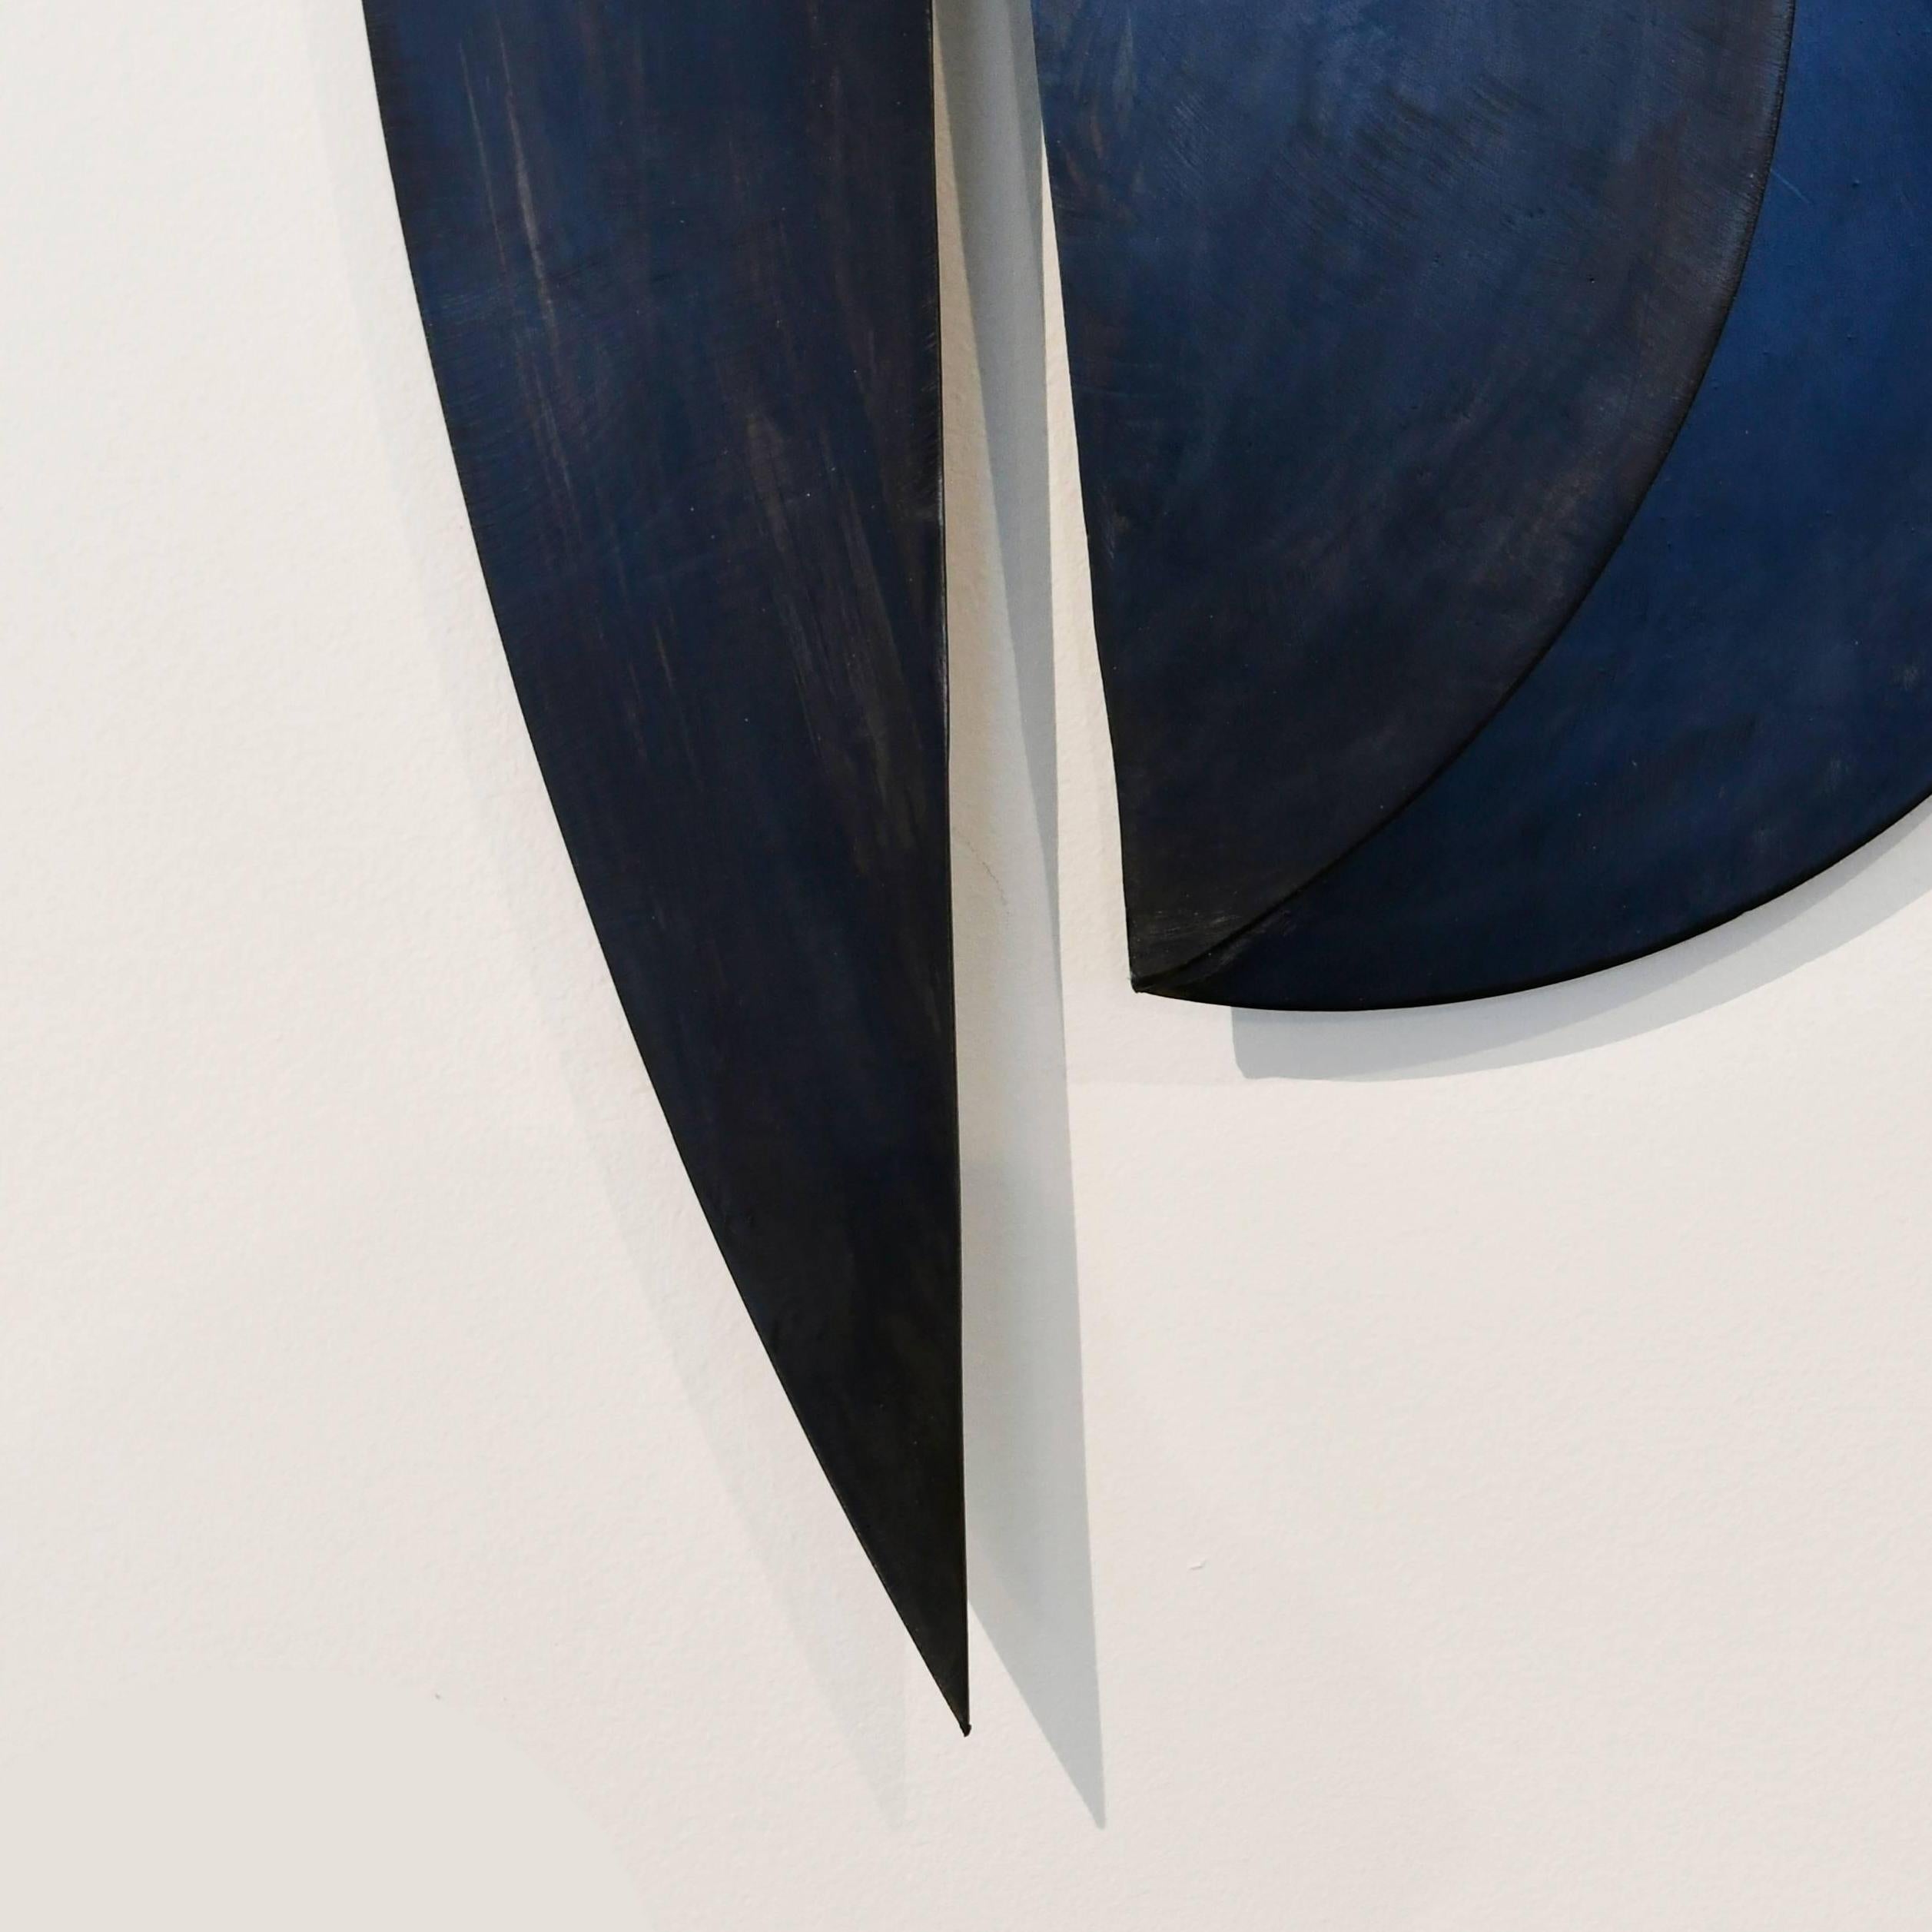 A Vague Echo - Beige Abstract Sculpture by Joe Wheaton